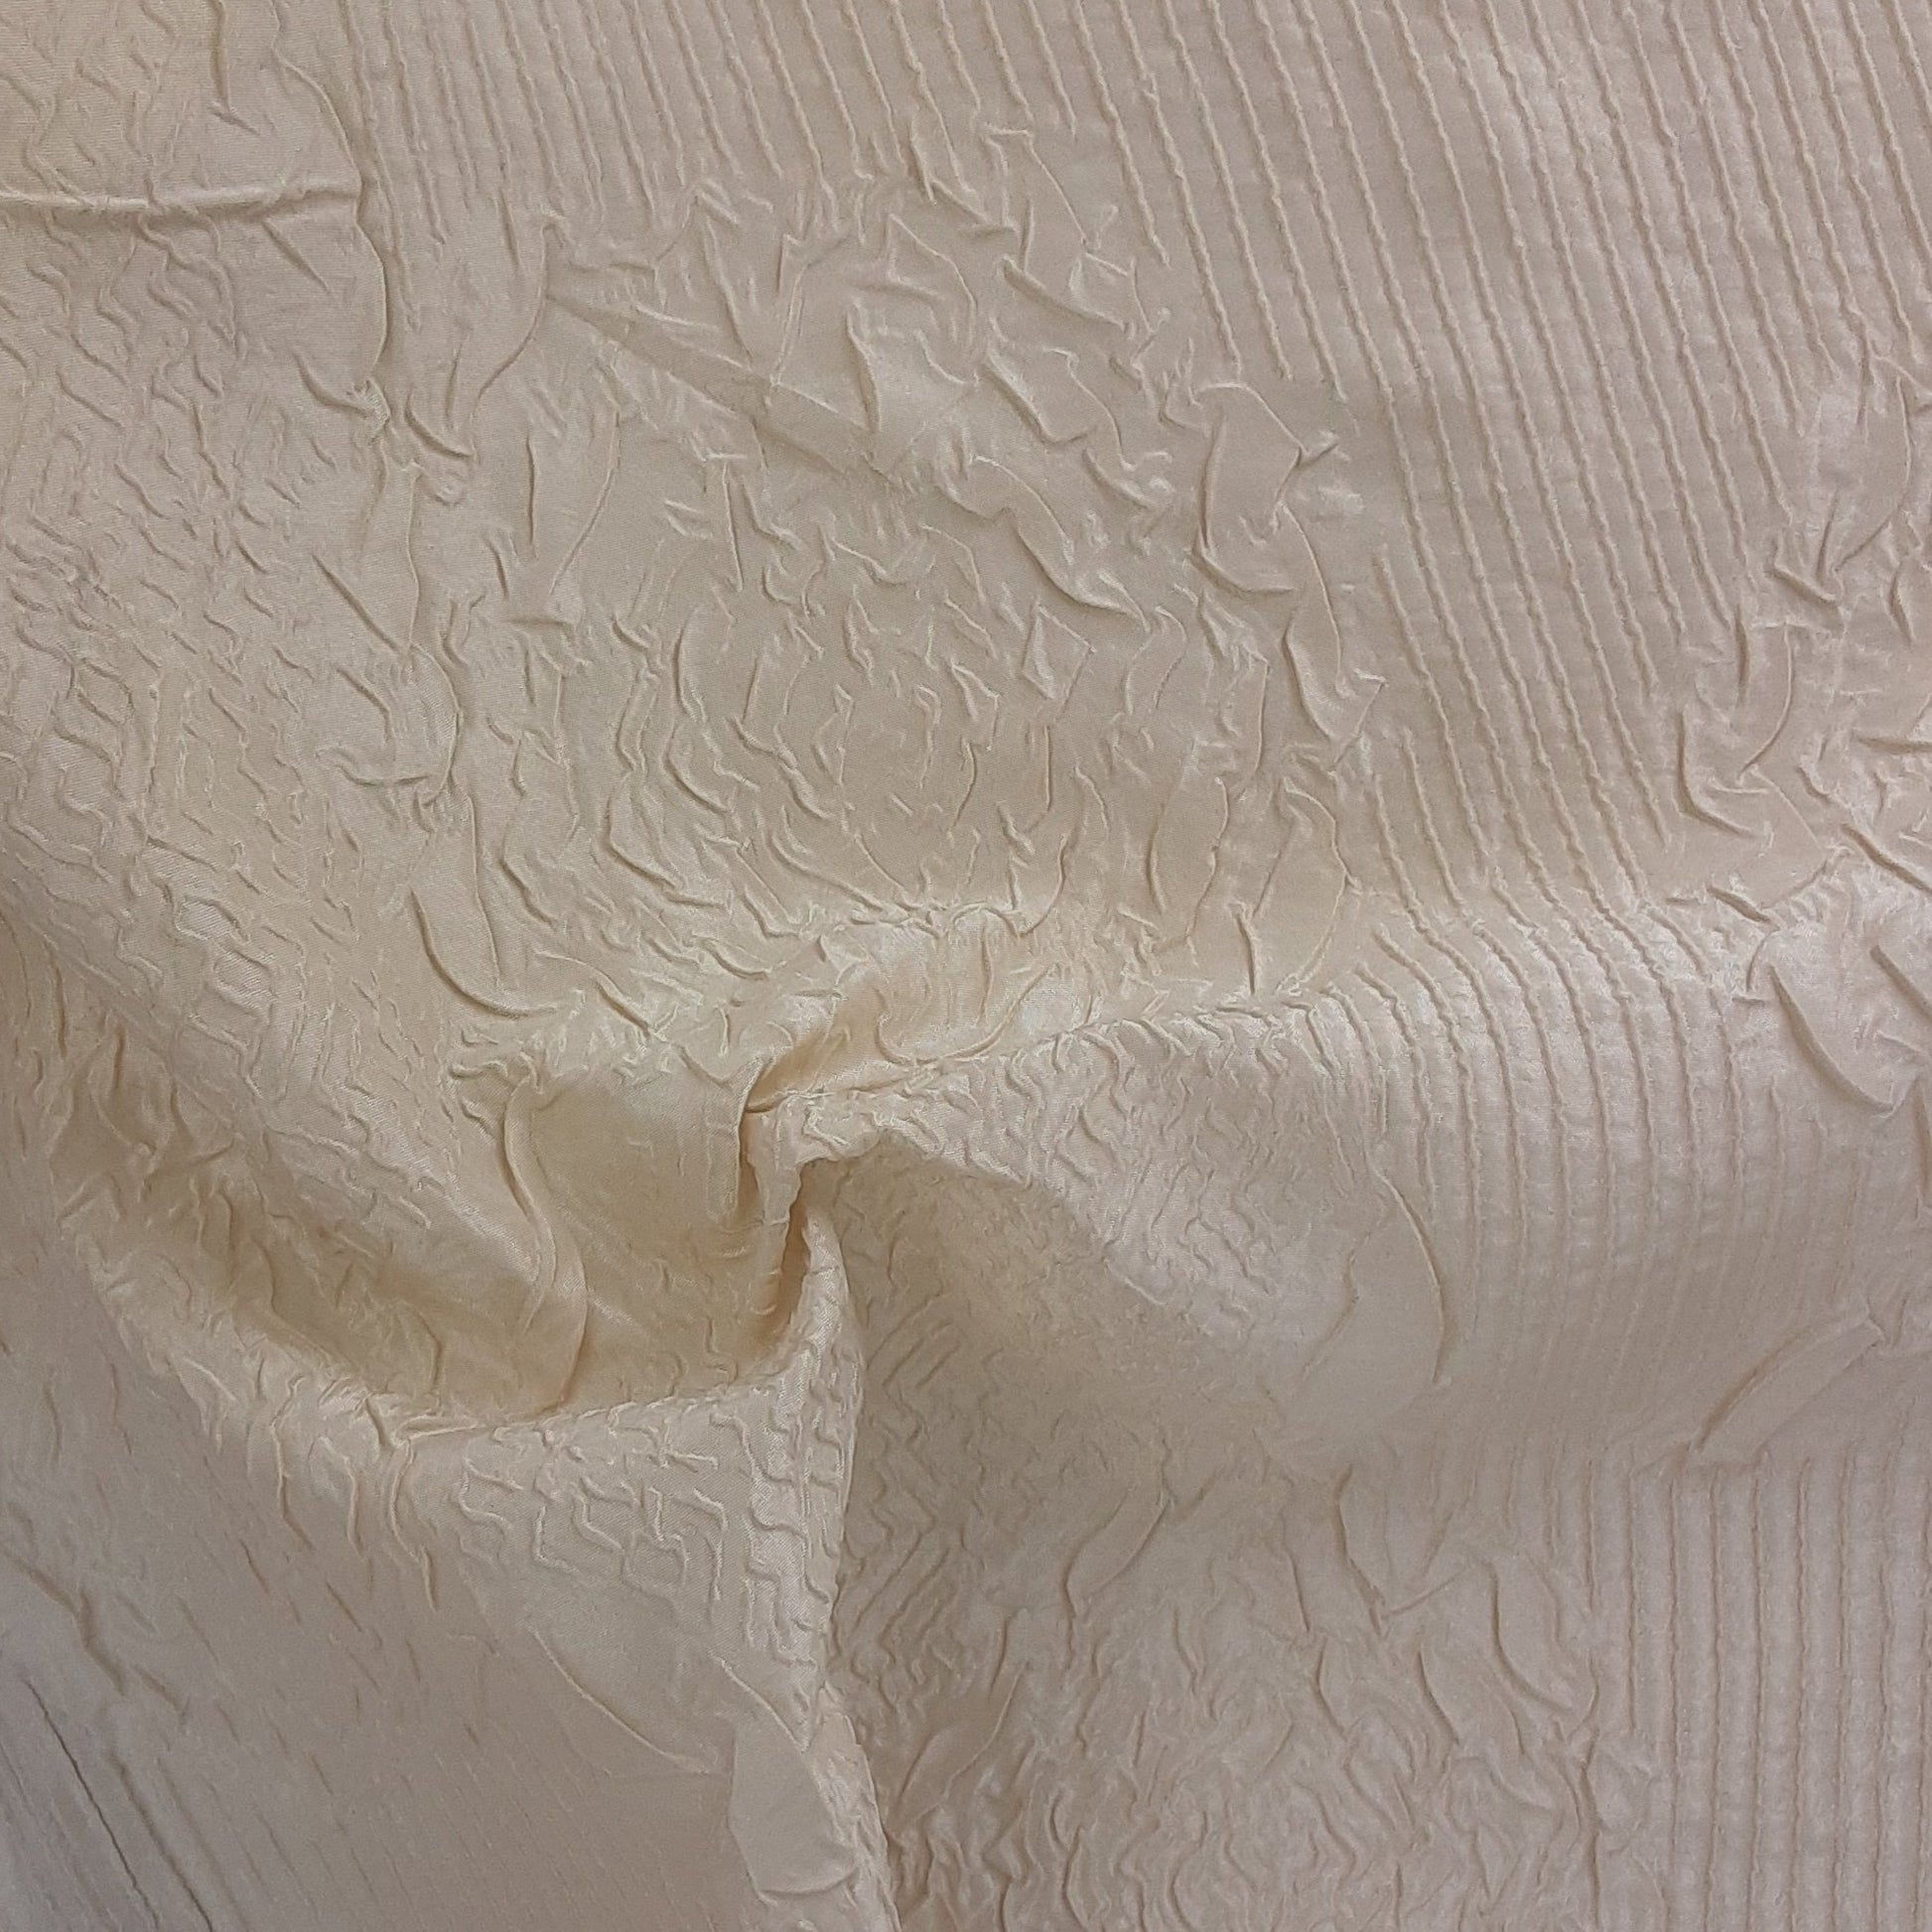 Champagne Crinkle #S180 Devine Taffeta Fancy Woven Fabric - SKU 6683A